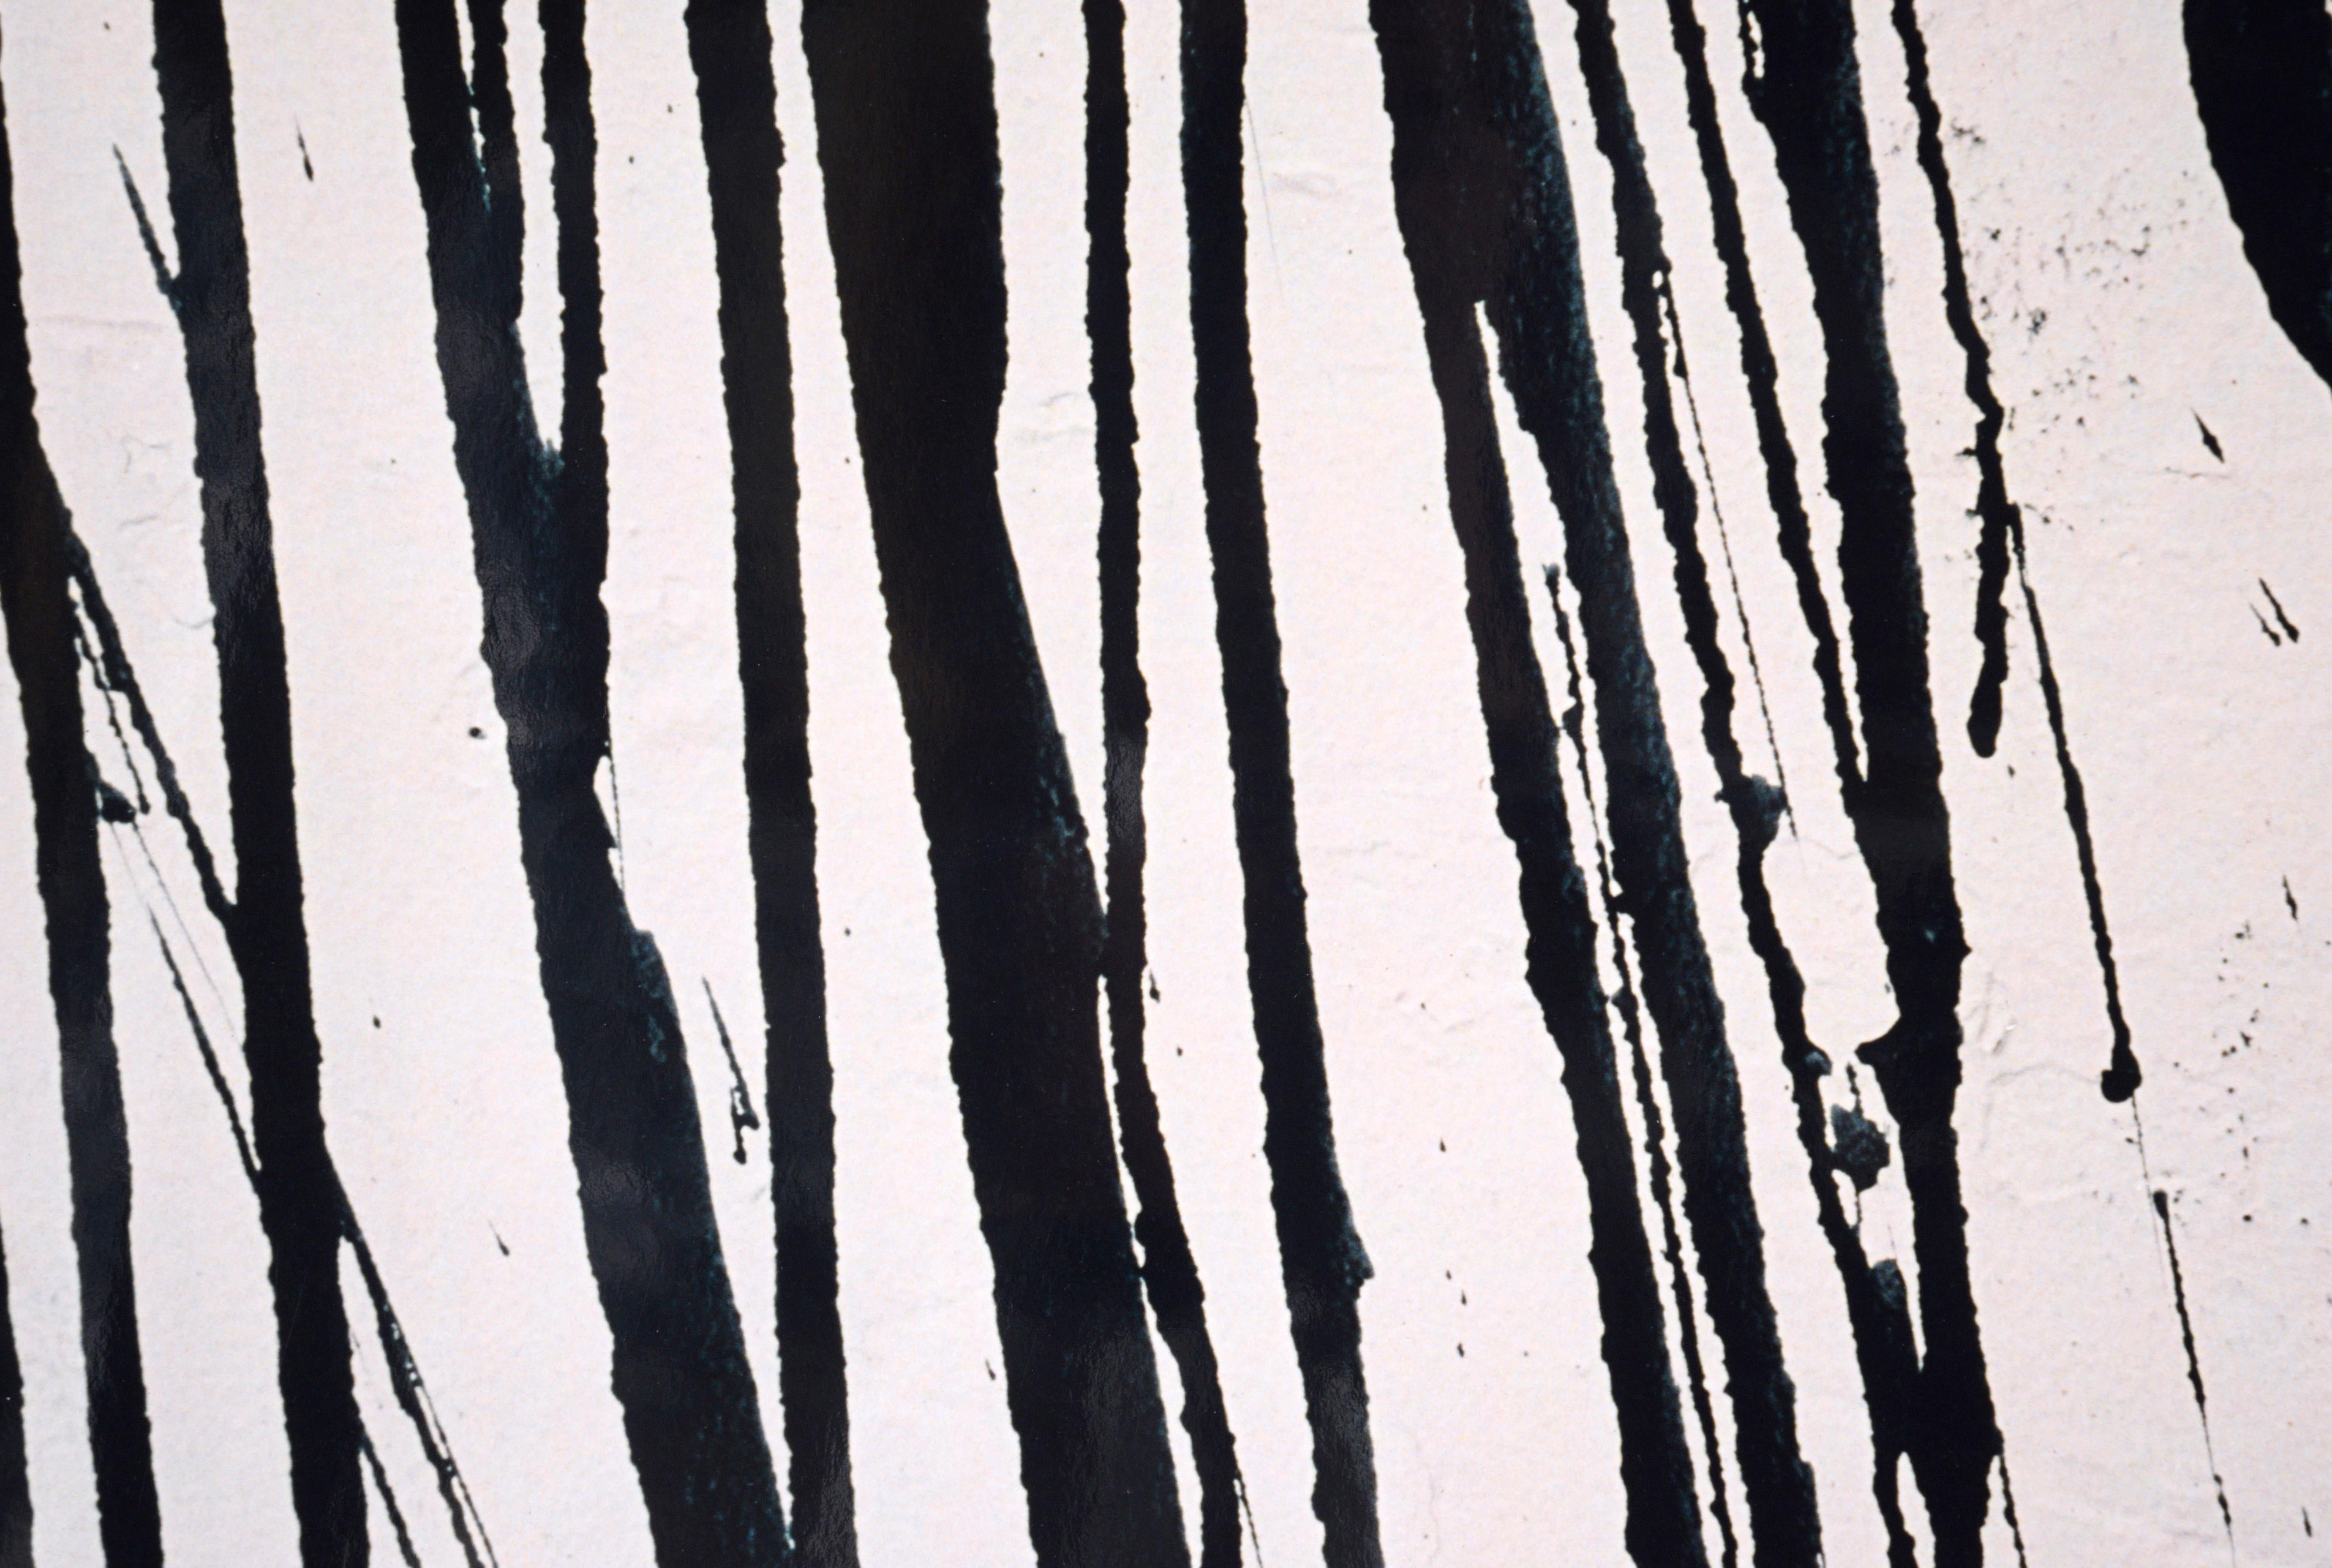 Black Paint Splatters - Large Scale Textural Photograph For Sale 4